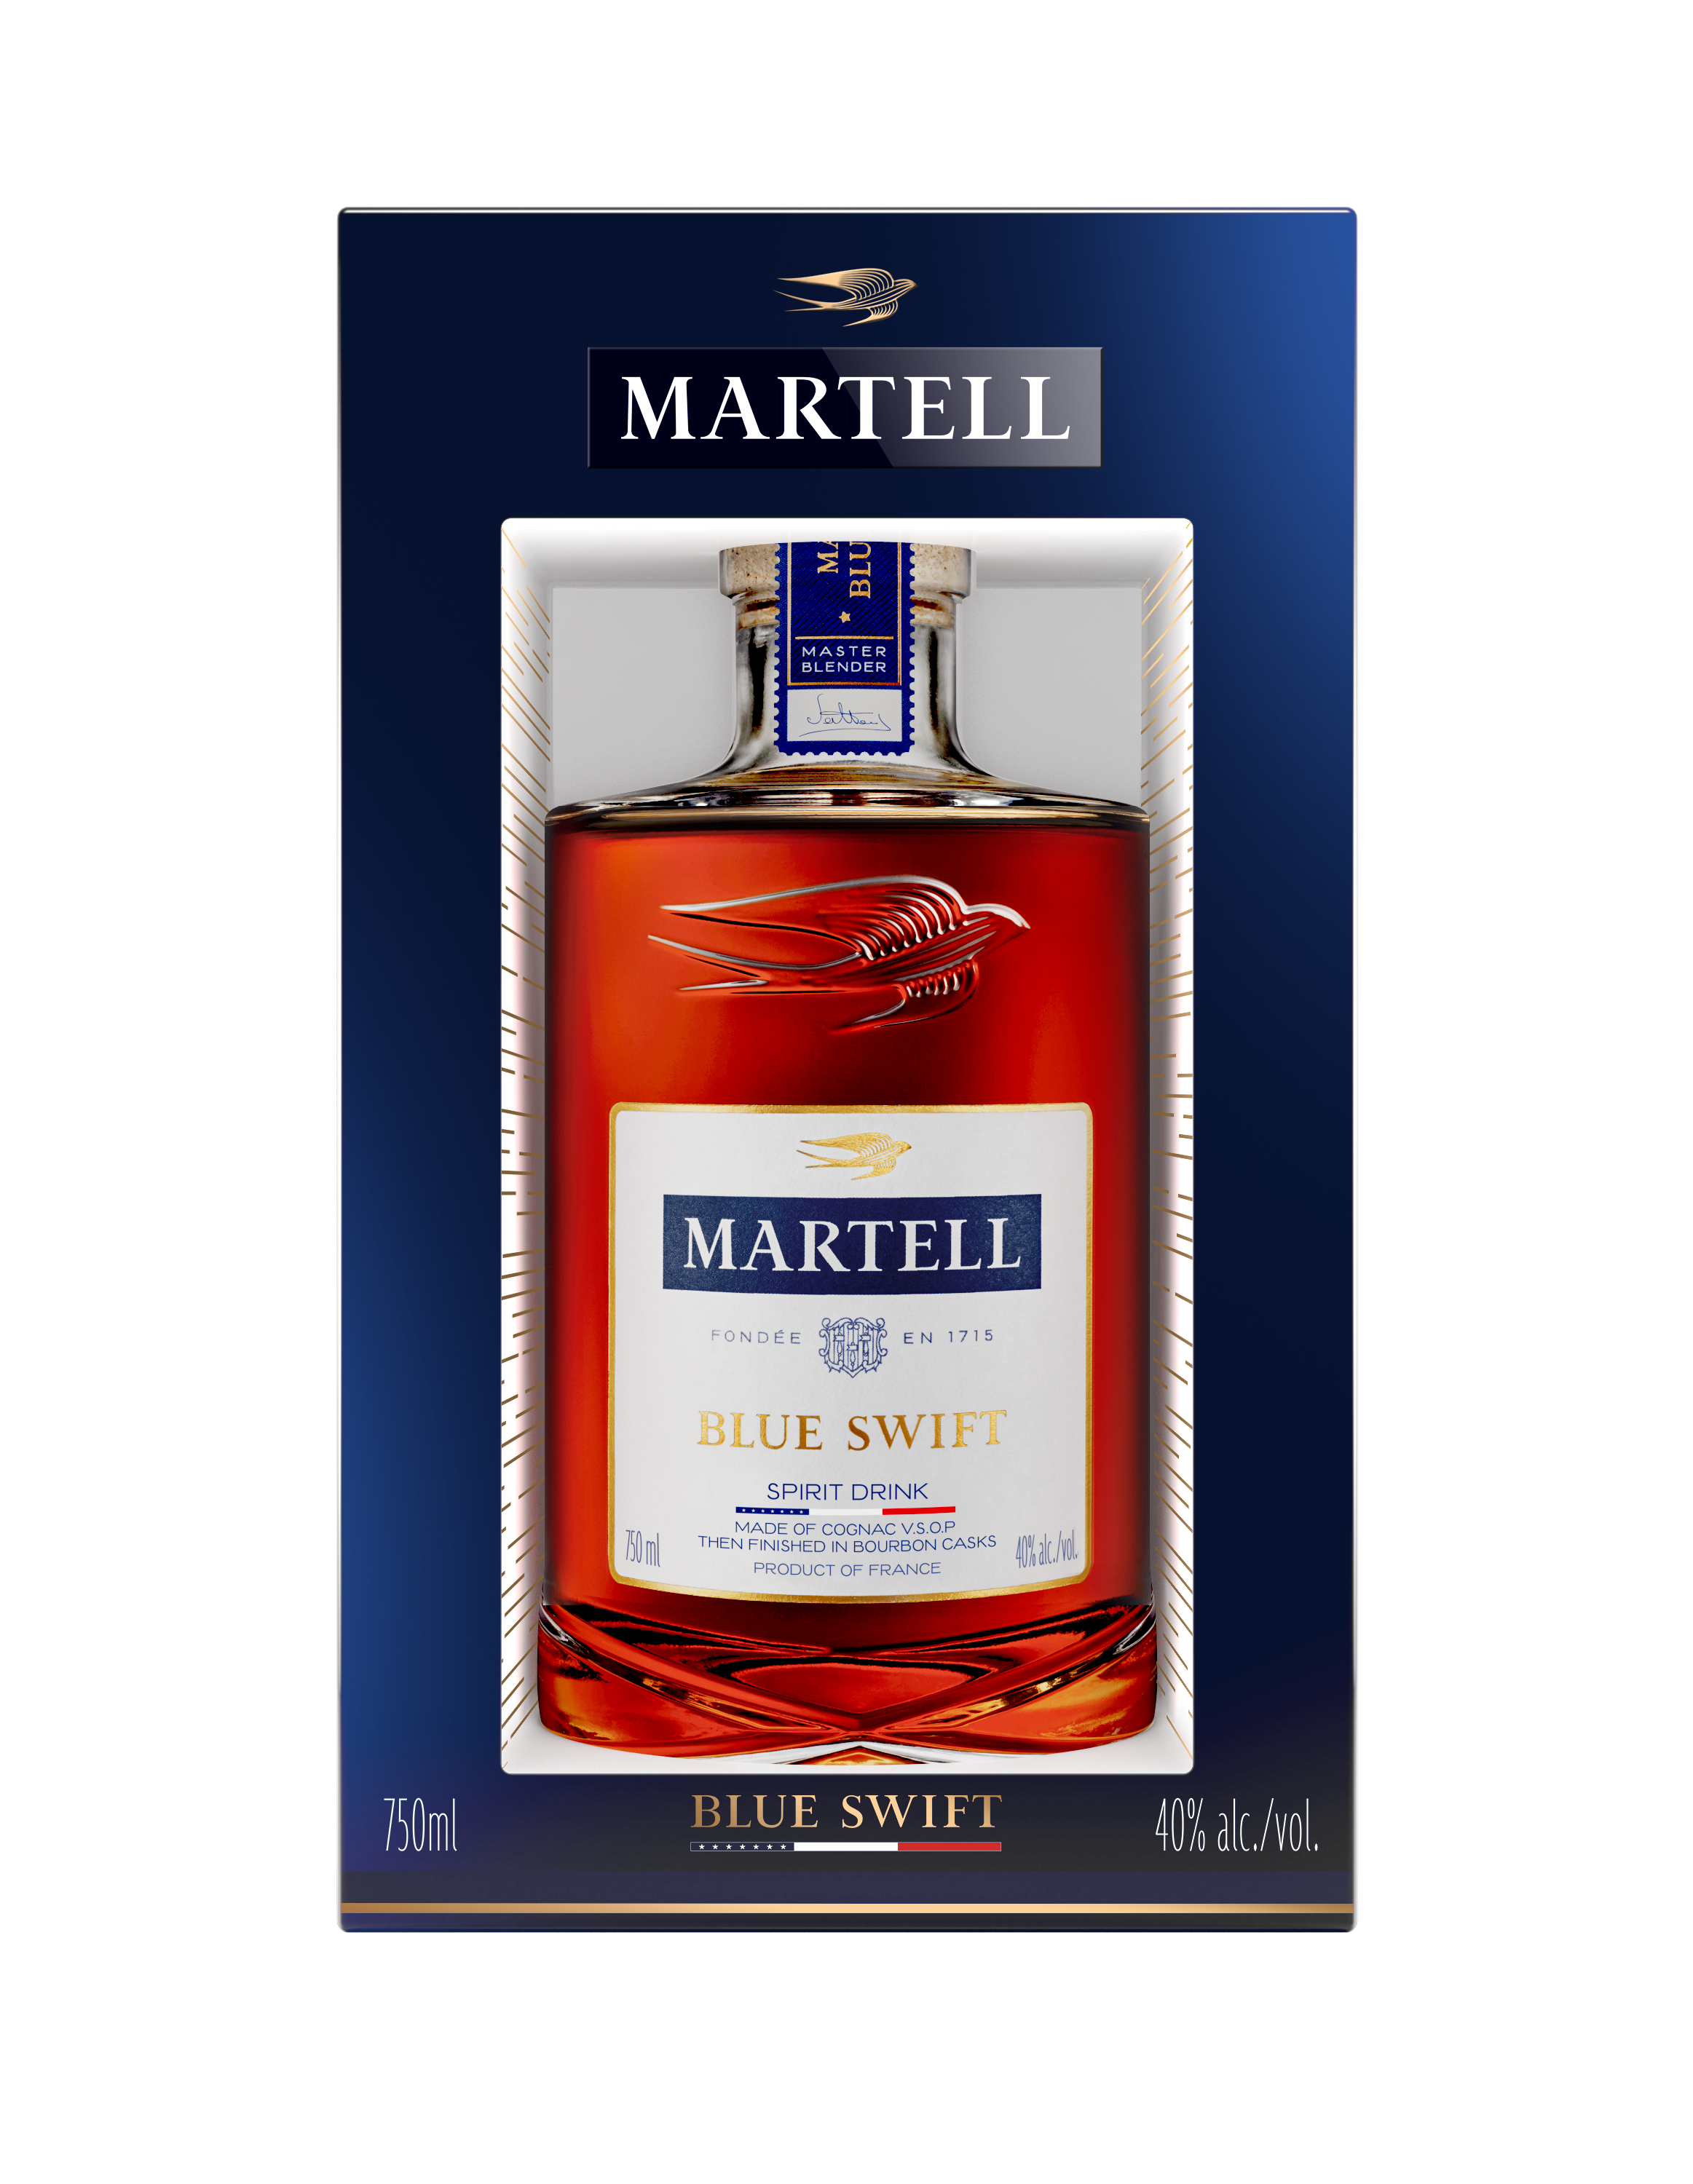 Martell 0.7 цена. Коньяк "Martell" Blue Swift, 0.7 л. Мартель ВСОП 0.7. Коньяк Martell Blue Swift. Мартель ВСОП 0.7 2010 год.